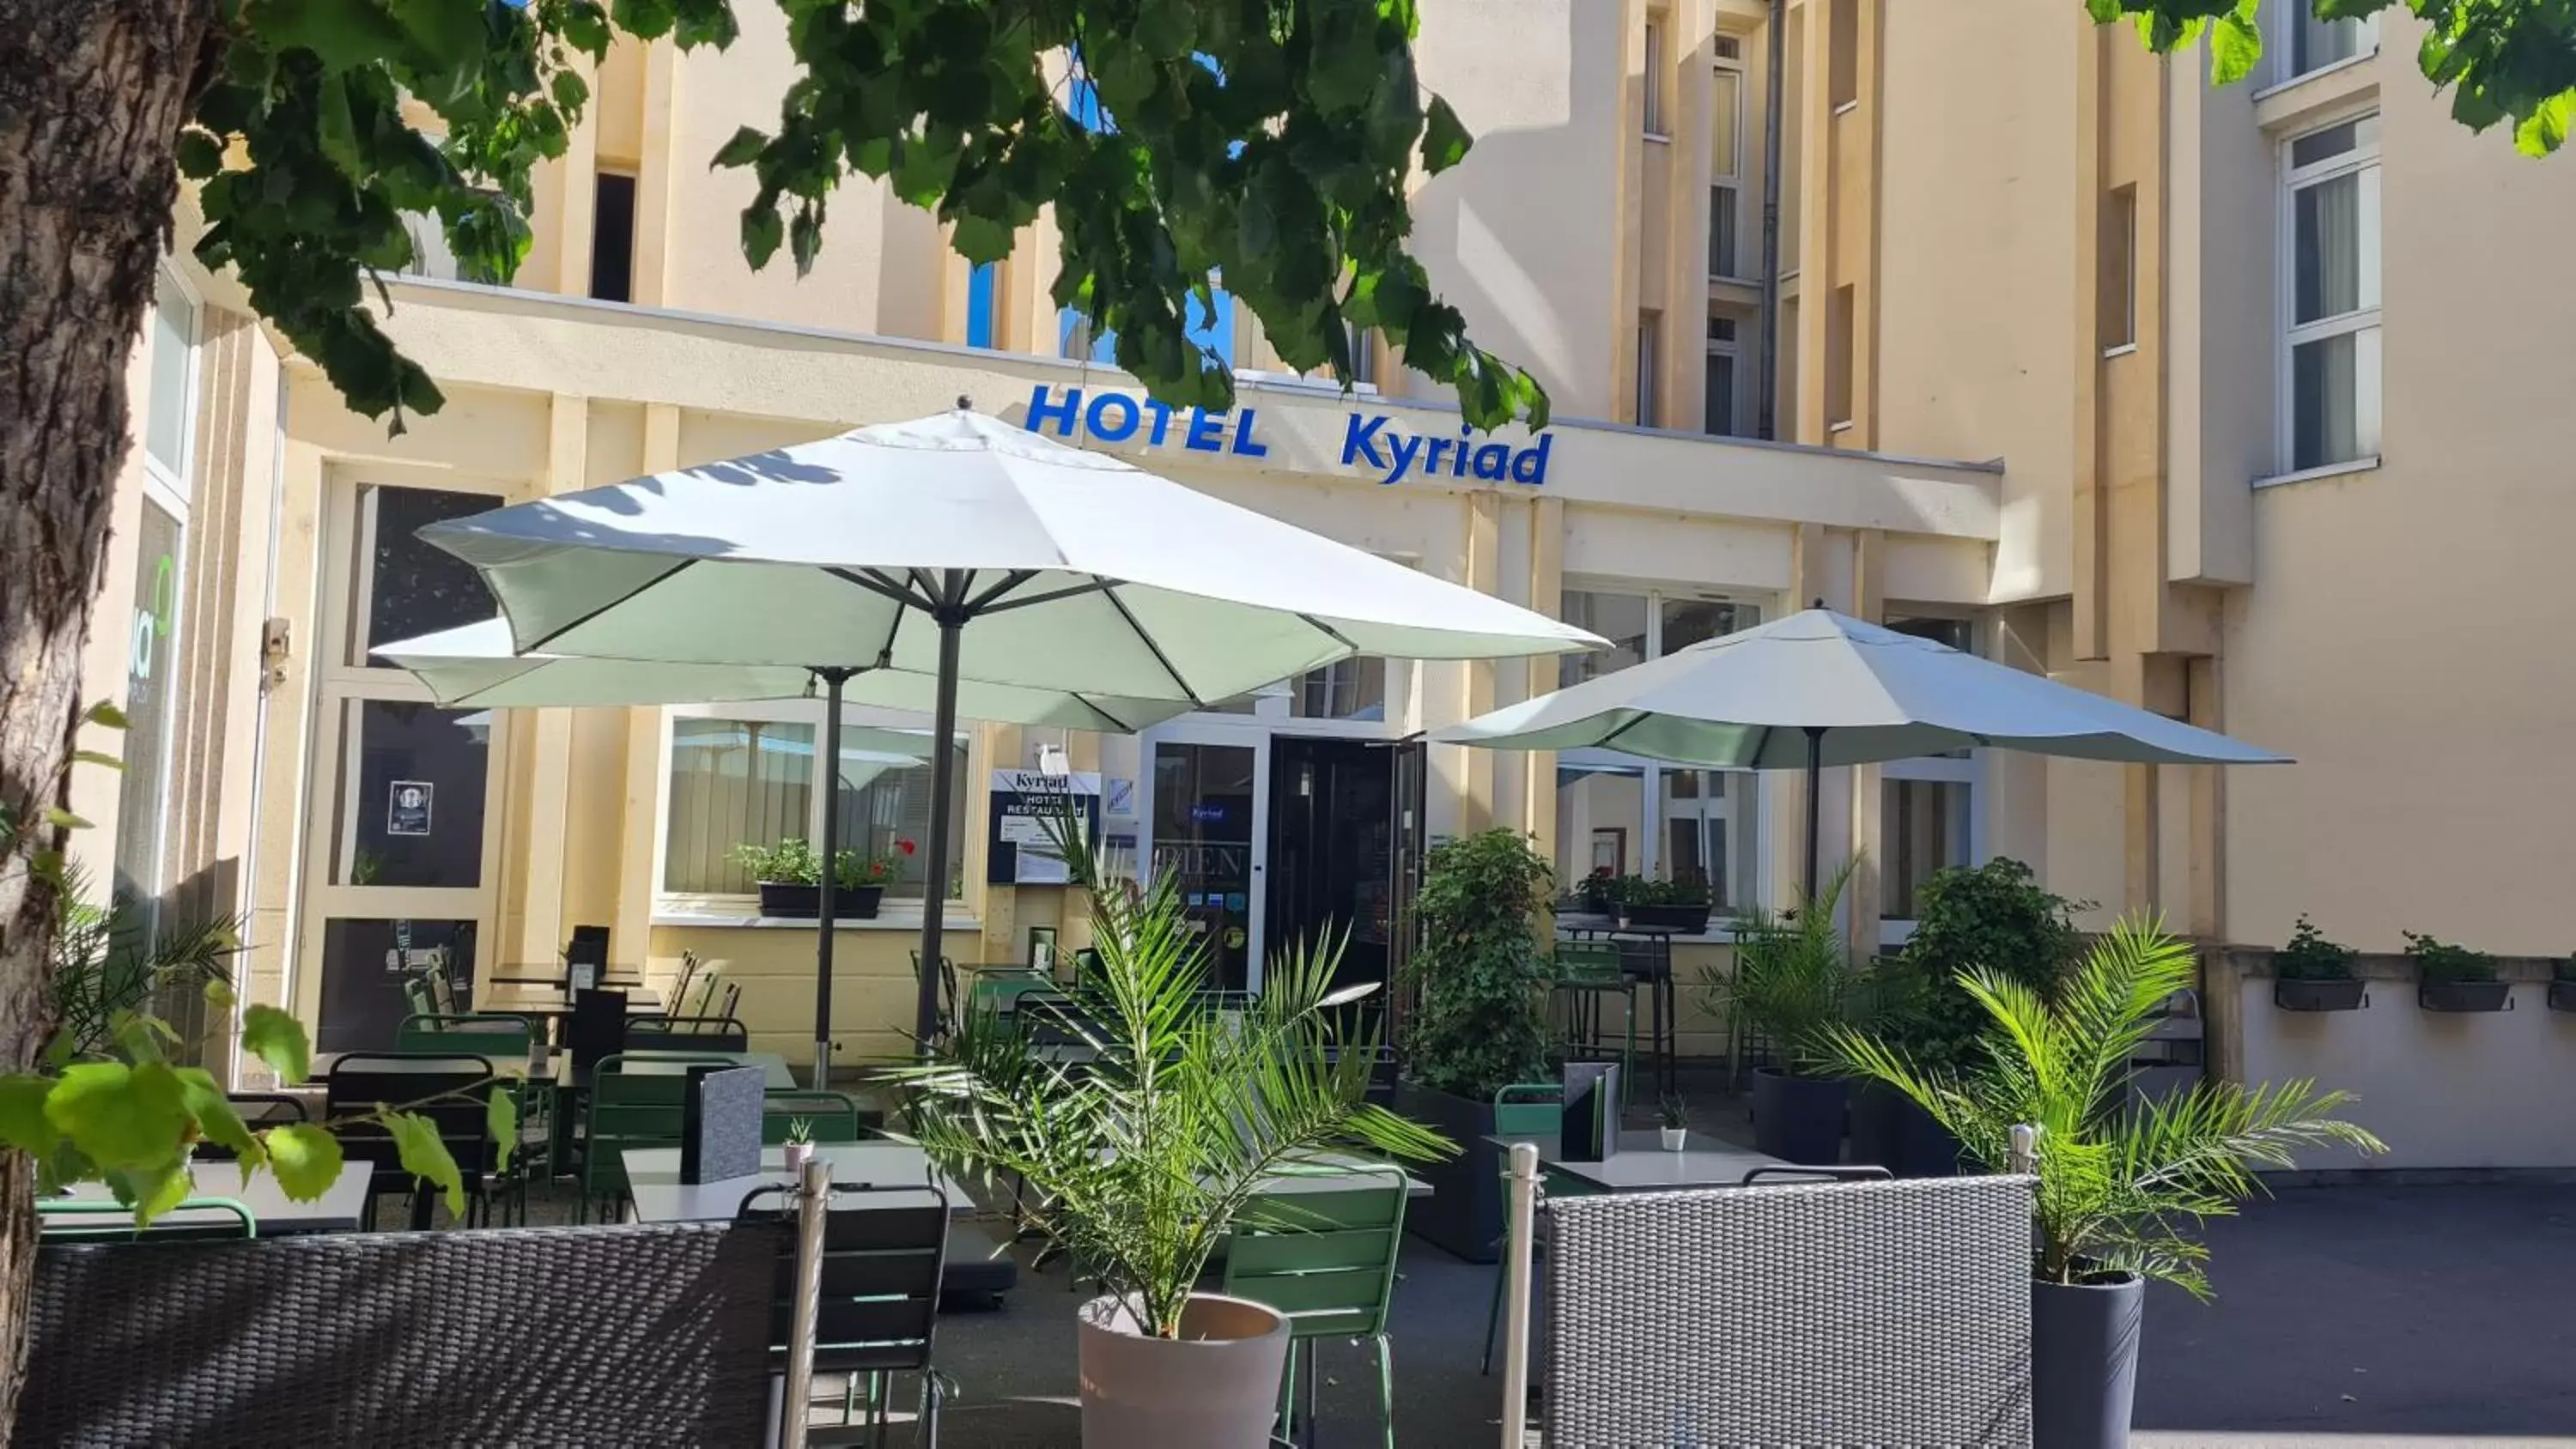 Facade/entrance, Restaurant/Places to Eat in Kyriad Metz Centre - Restaurant Moze